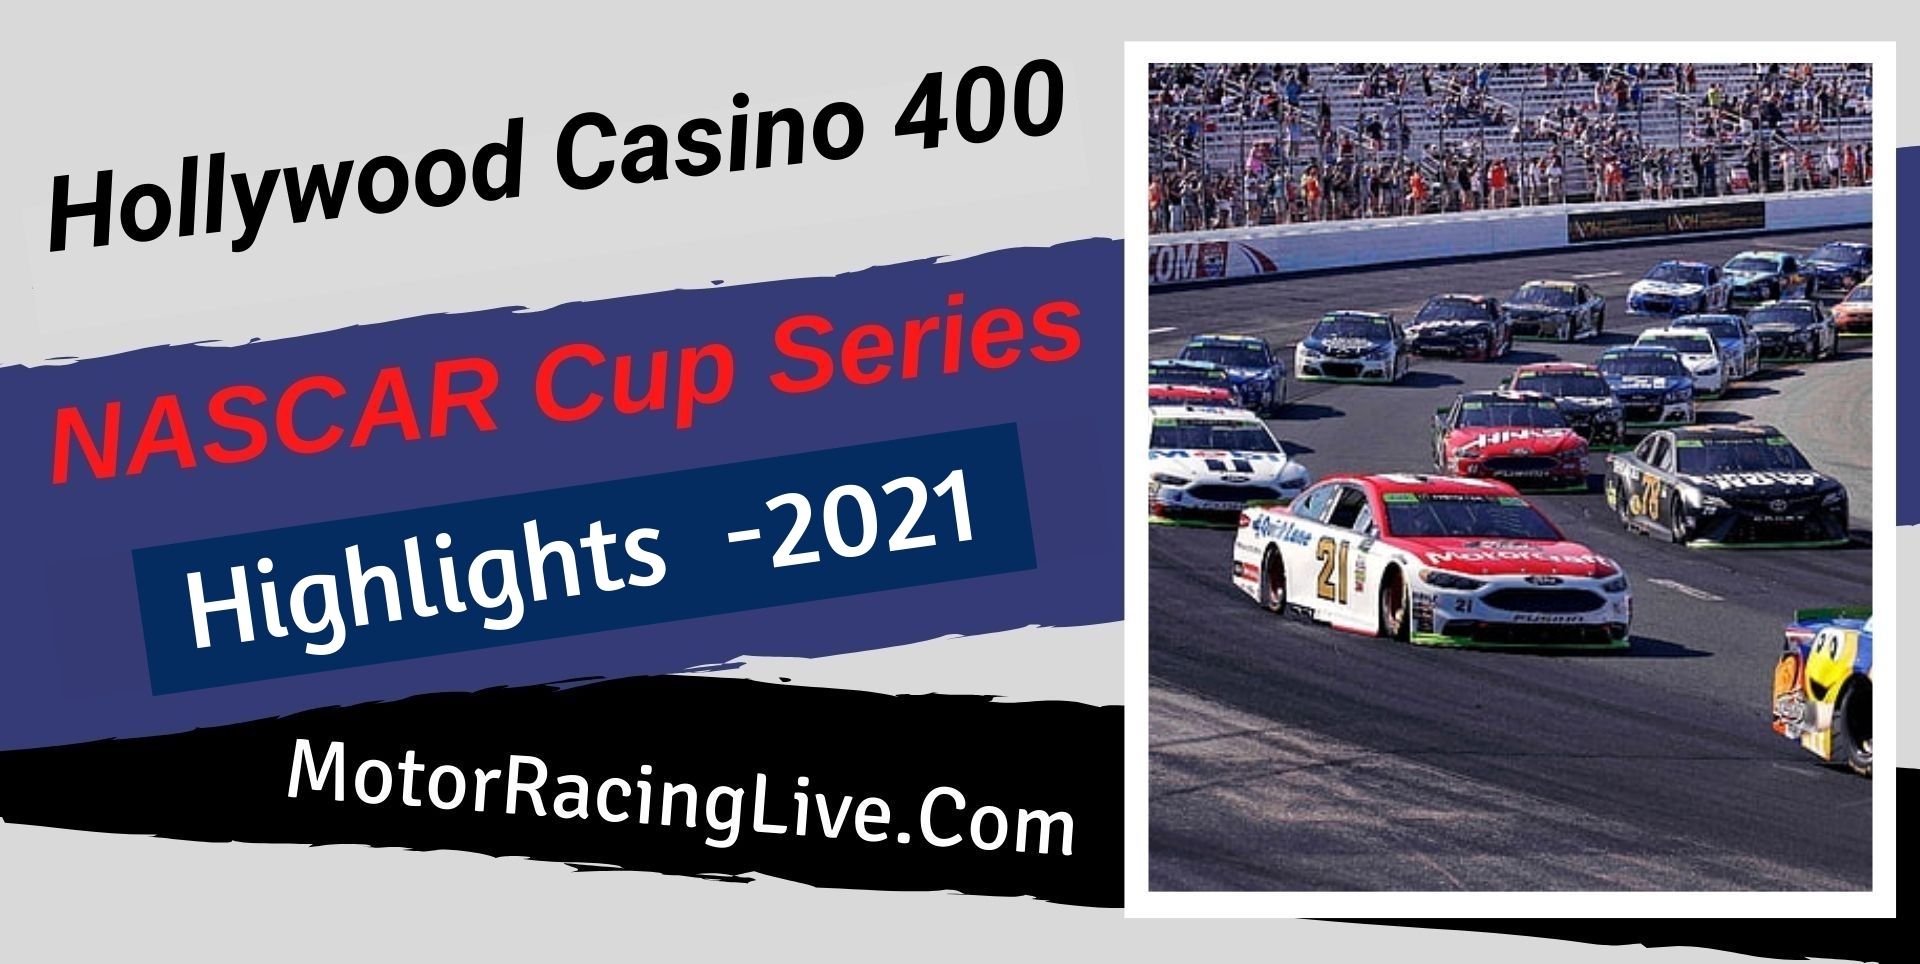 Hollywood Casino 400 Highlights 2021 NASCAR Cup Series